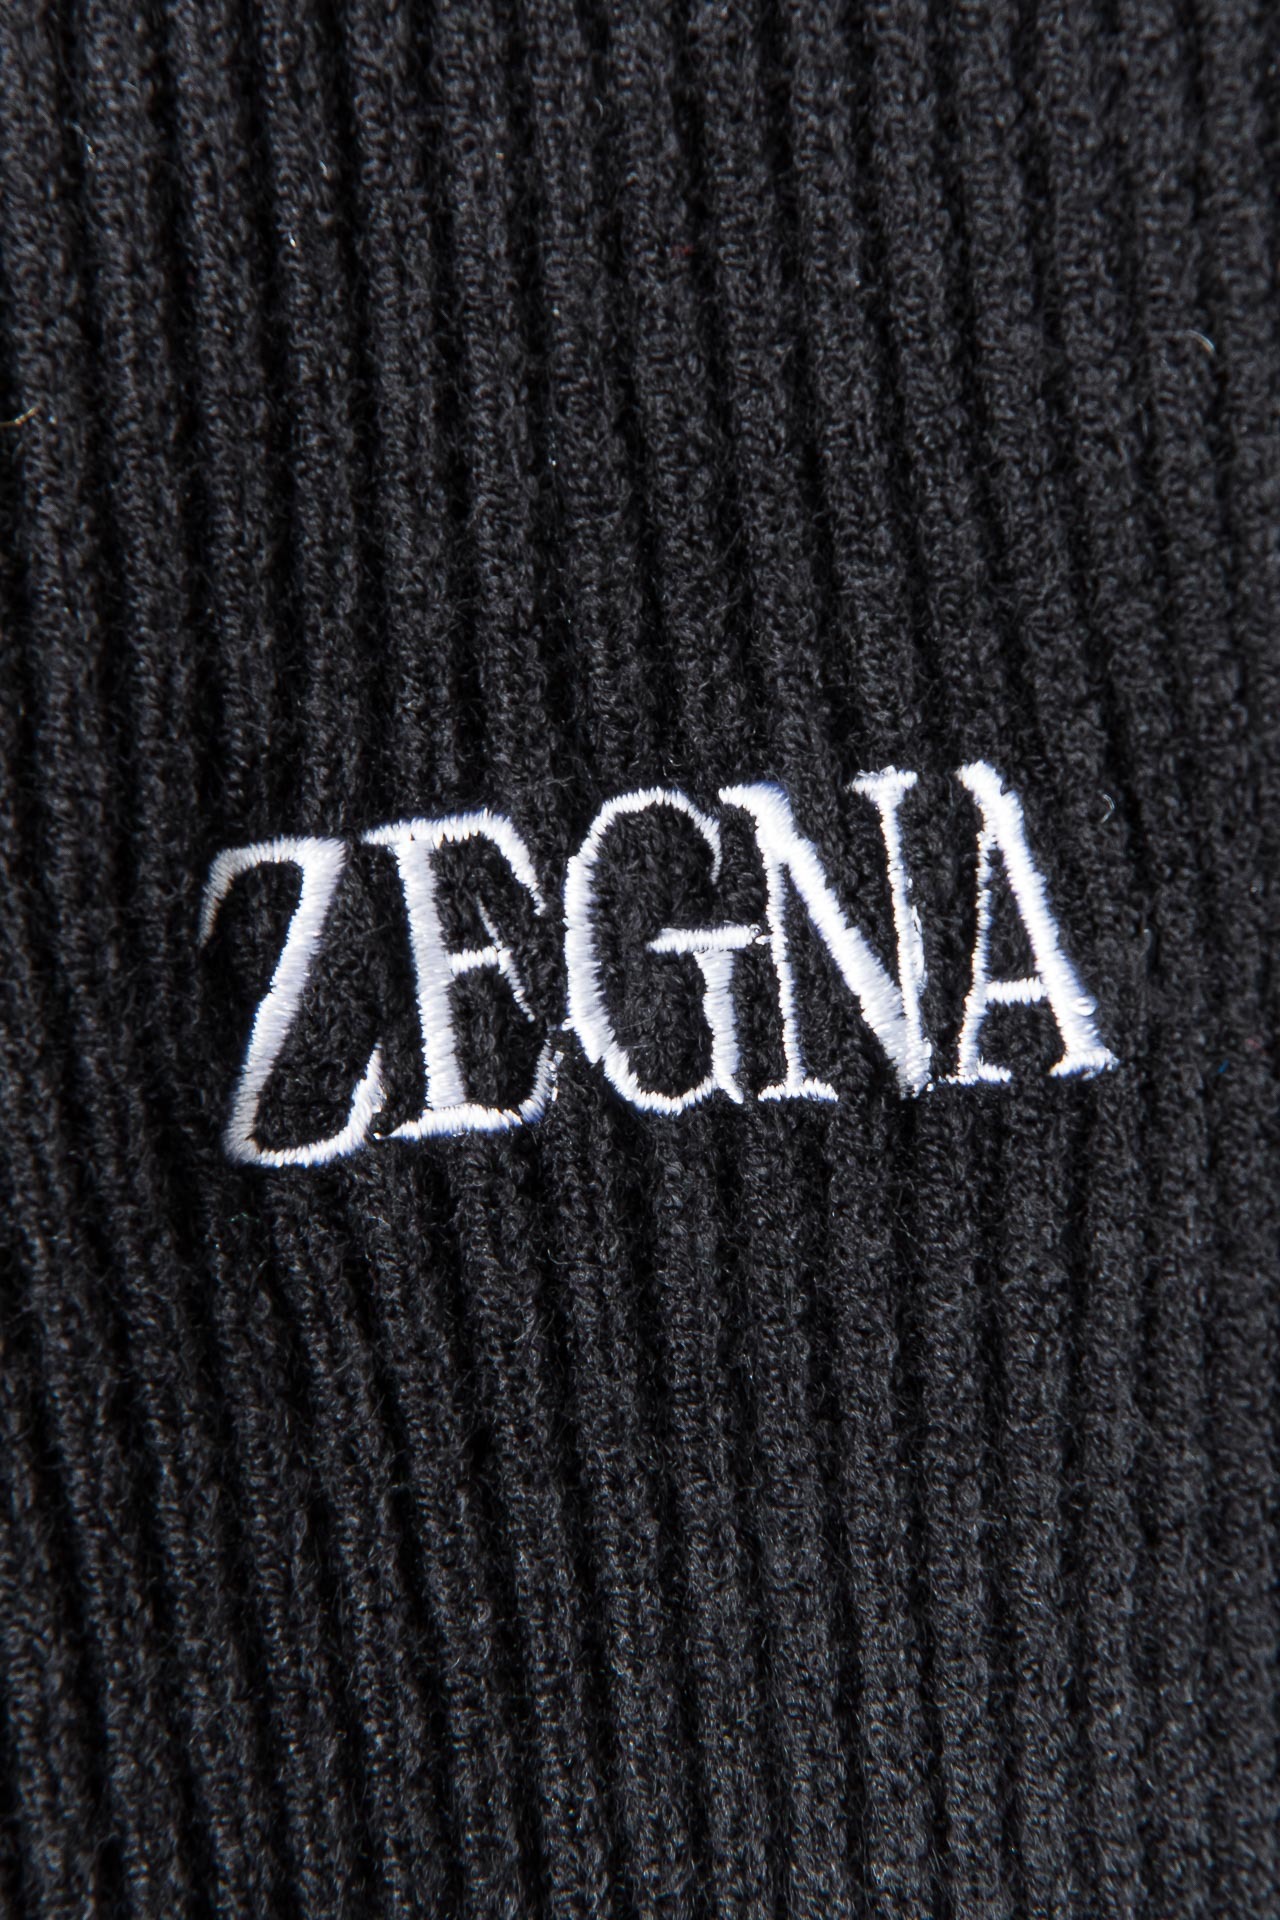 New#！！！杰尼亚ZEGNA24FW新品刺绣logo#拉链翻领毛衣/羊毛衫！经典的美丽奴羊毛混纺织造天